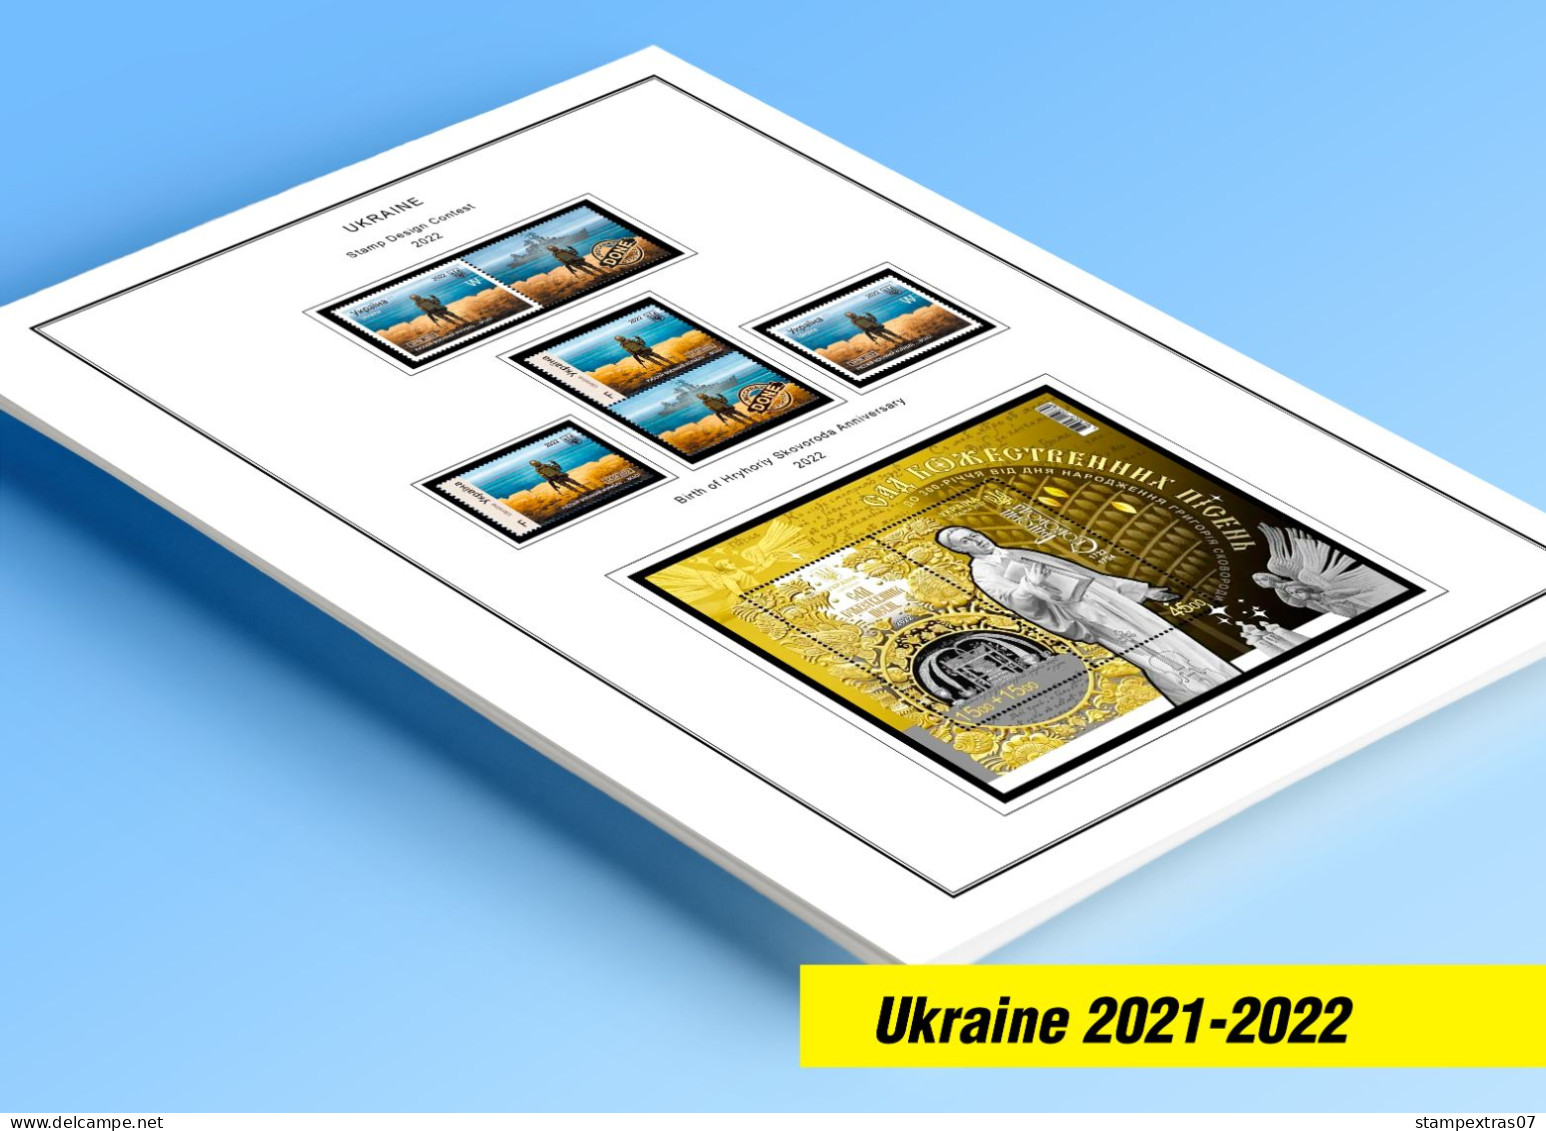 COLOR PRINTED UKRAINE 2021-2022 STAMP ALBUM PAGES (17 Illustrated Pages) >> FEUILLES ALBUM - Pre-printed Pages